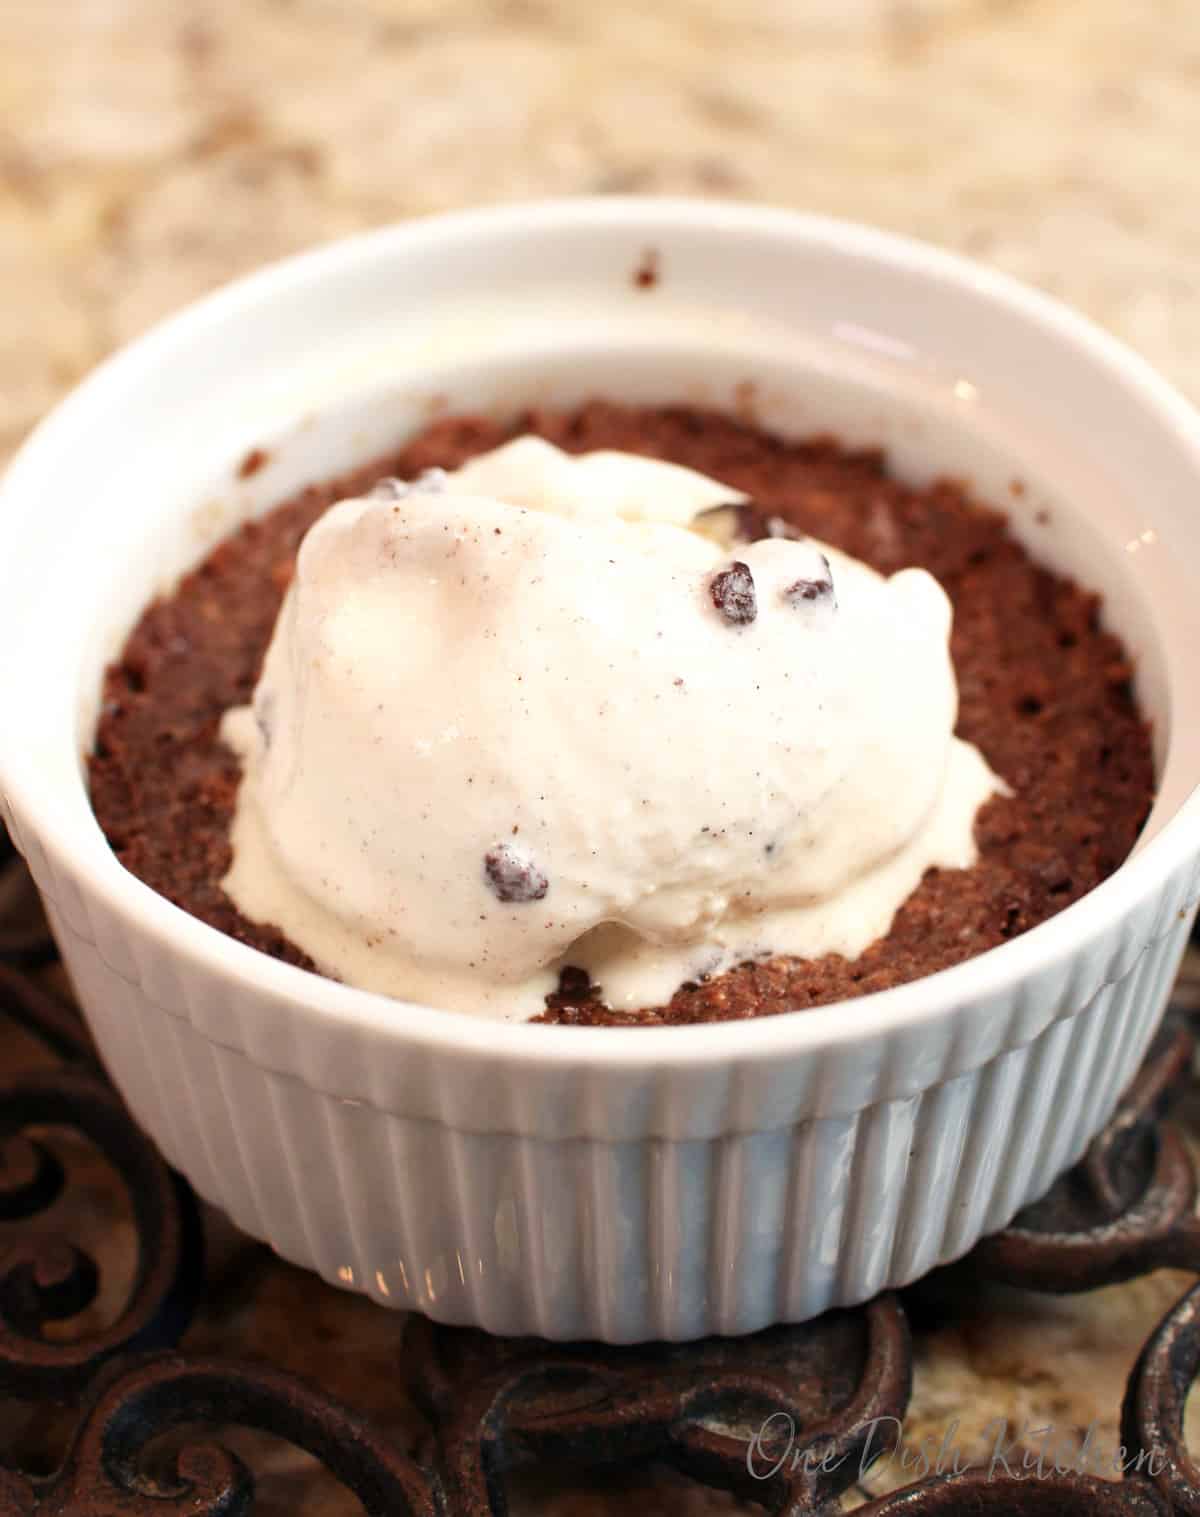 a single brownie in a ramekin topped with ice cream.